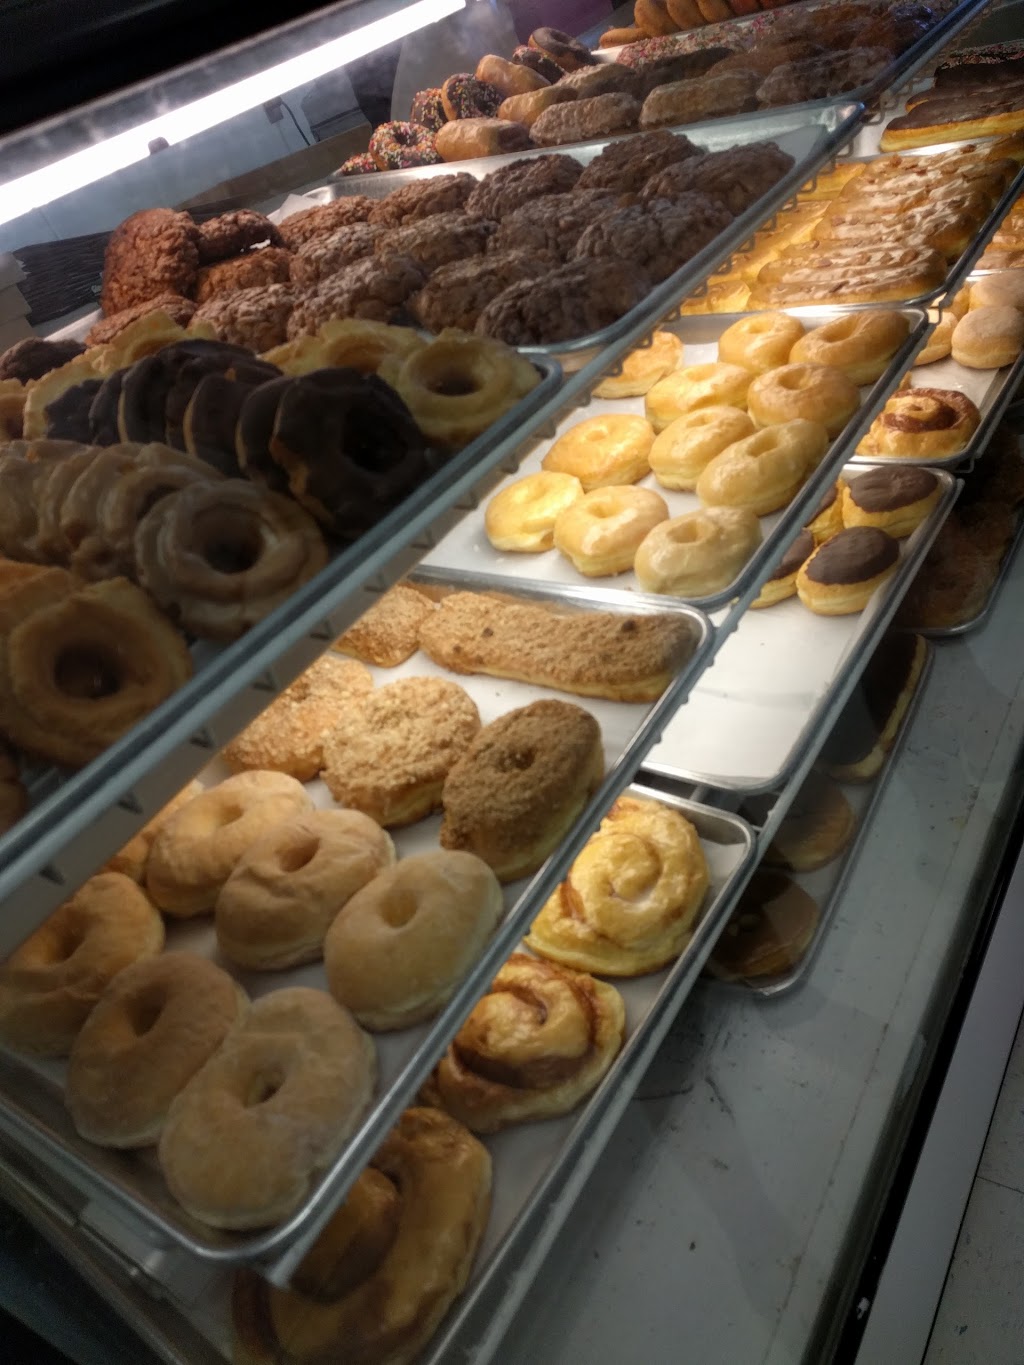 Bakers Dozen Donuts | 140 Douglas St, Dayton, NV 89403, USA | Phone: (775) 241-2208